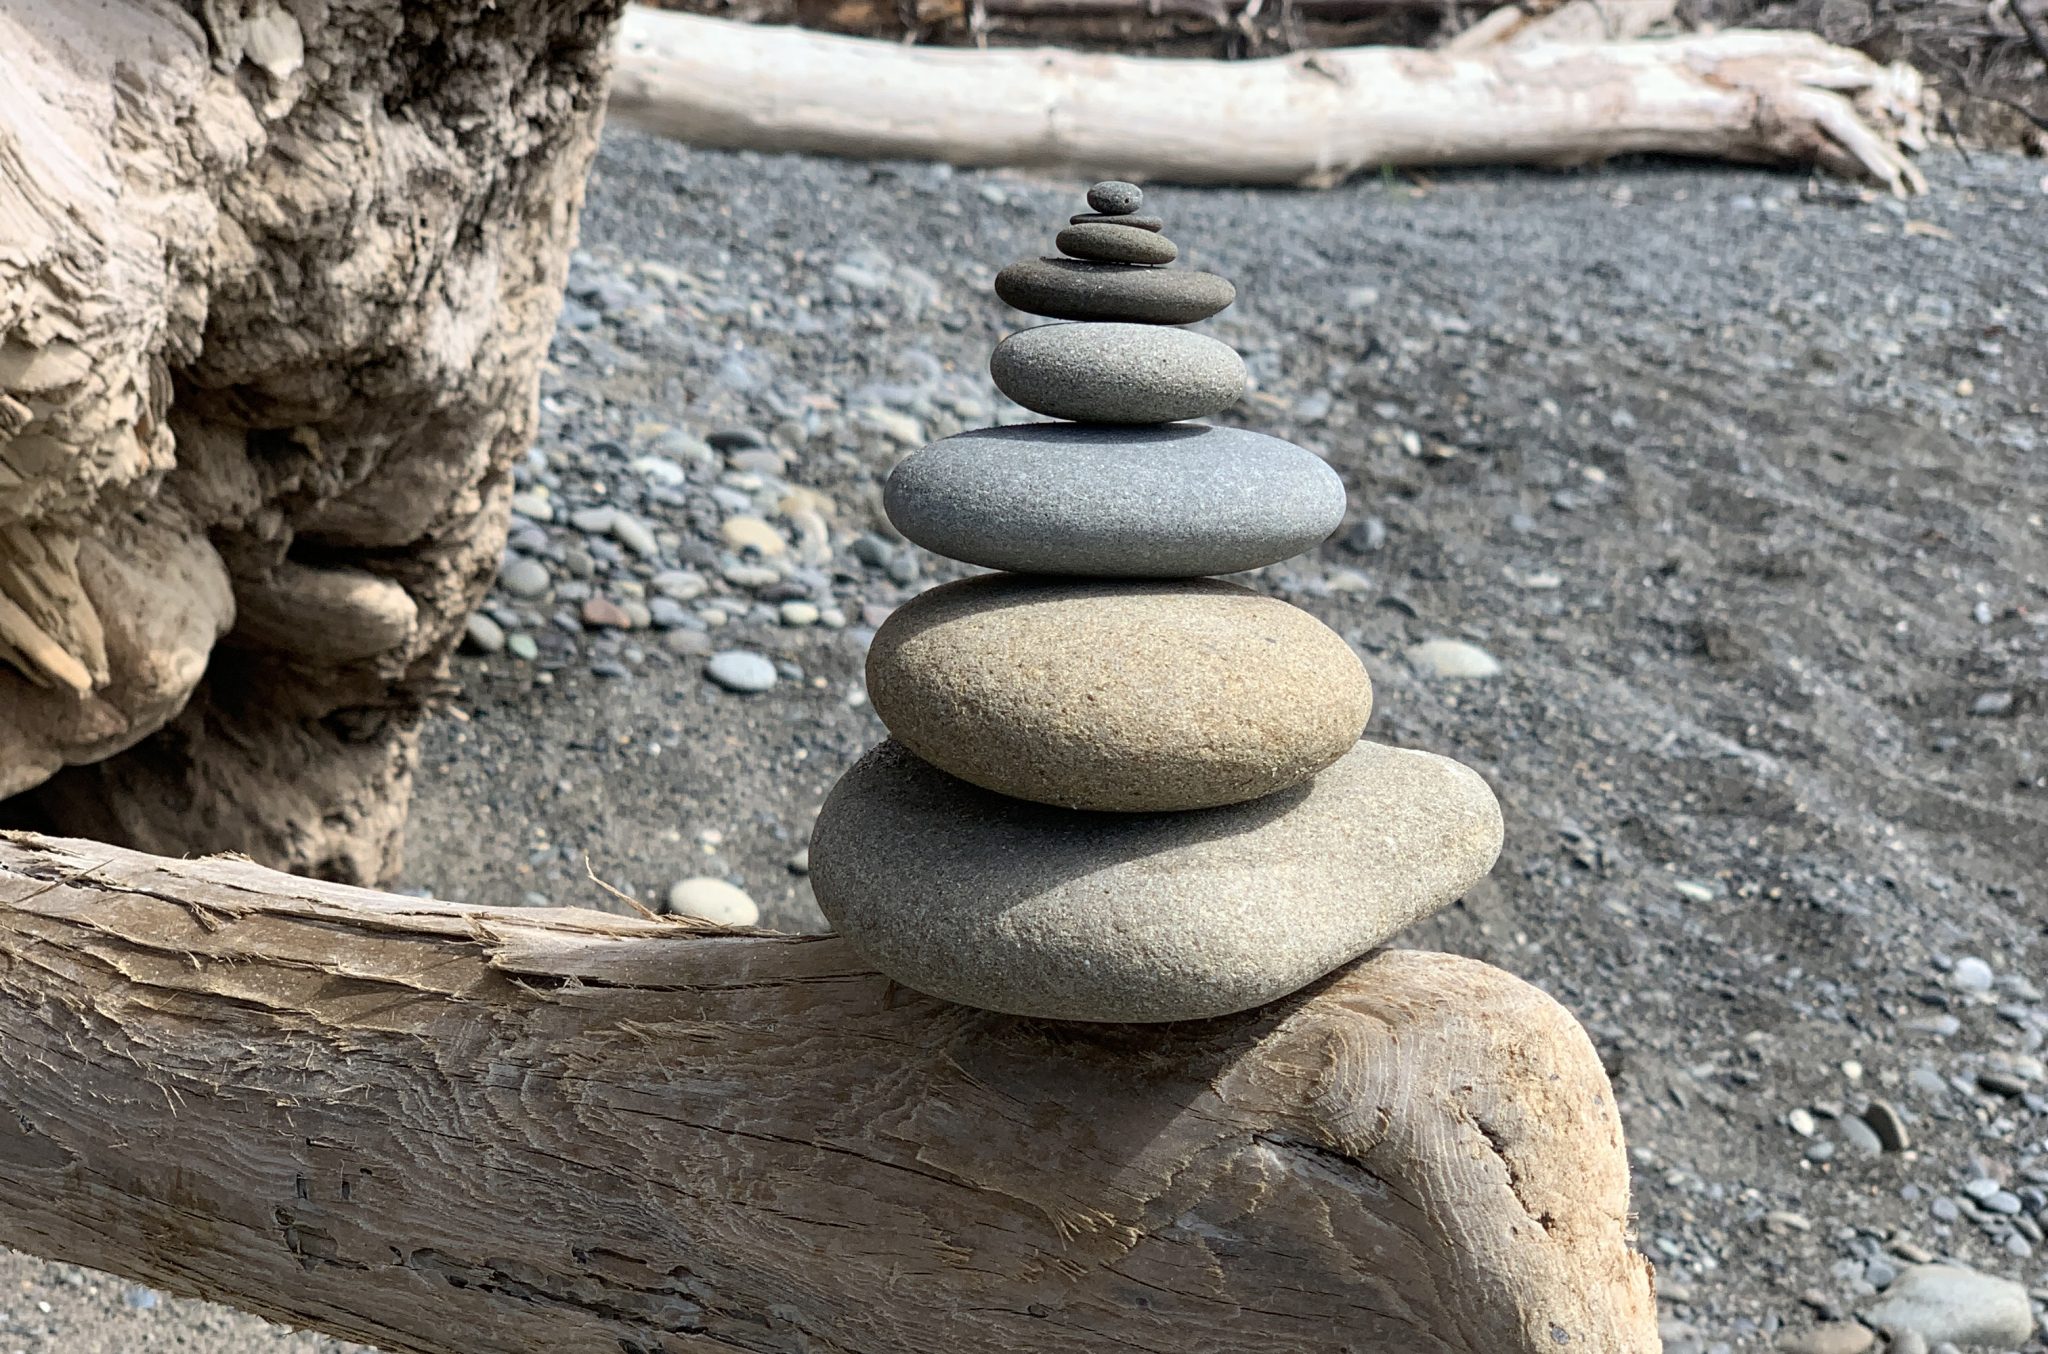 Stacked rocks balancing on driftwood.